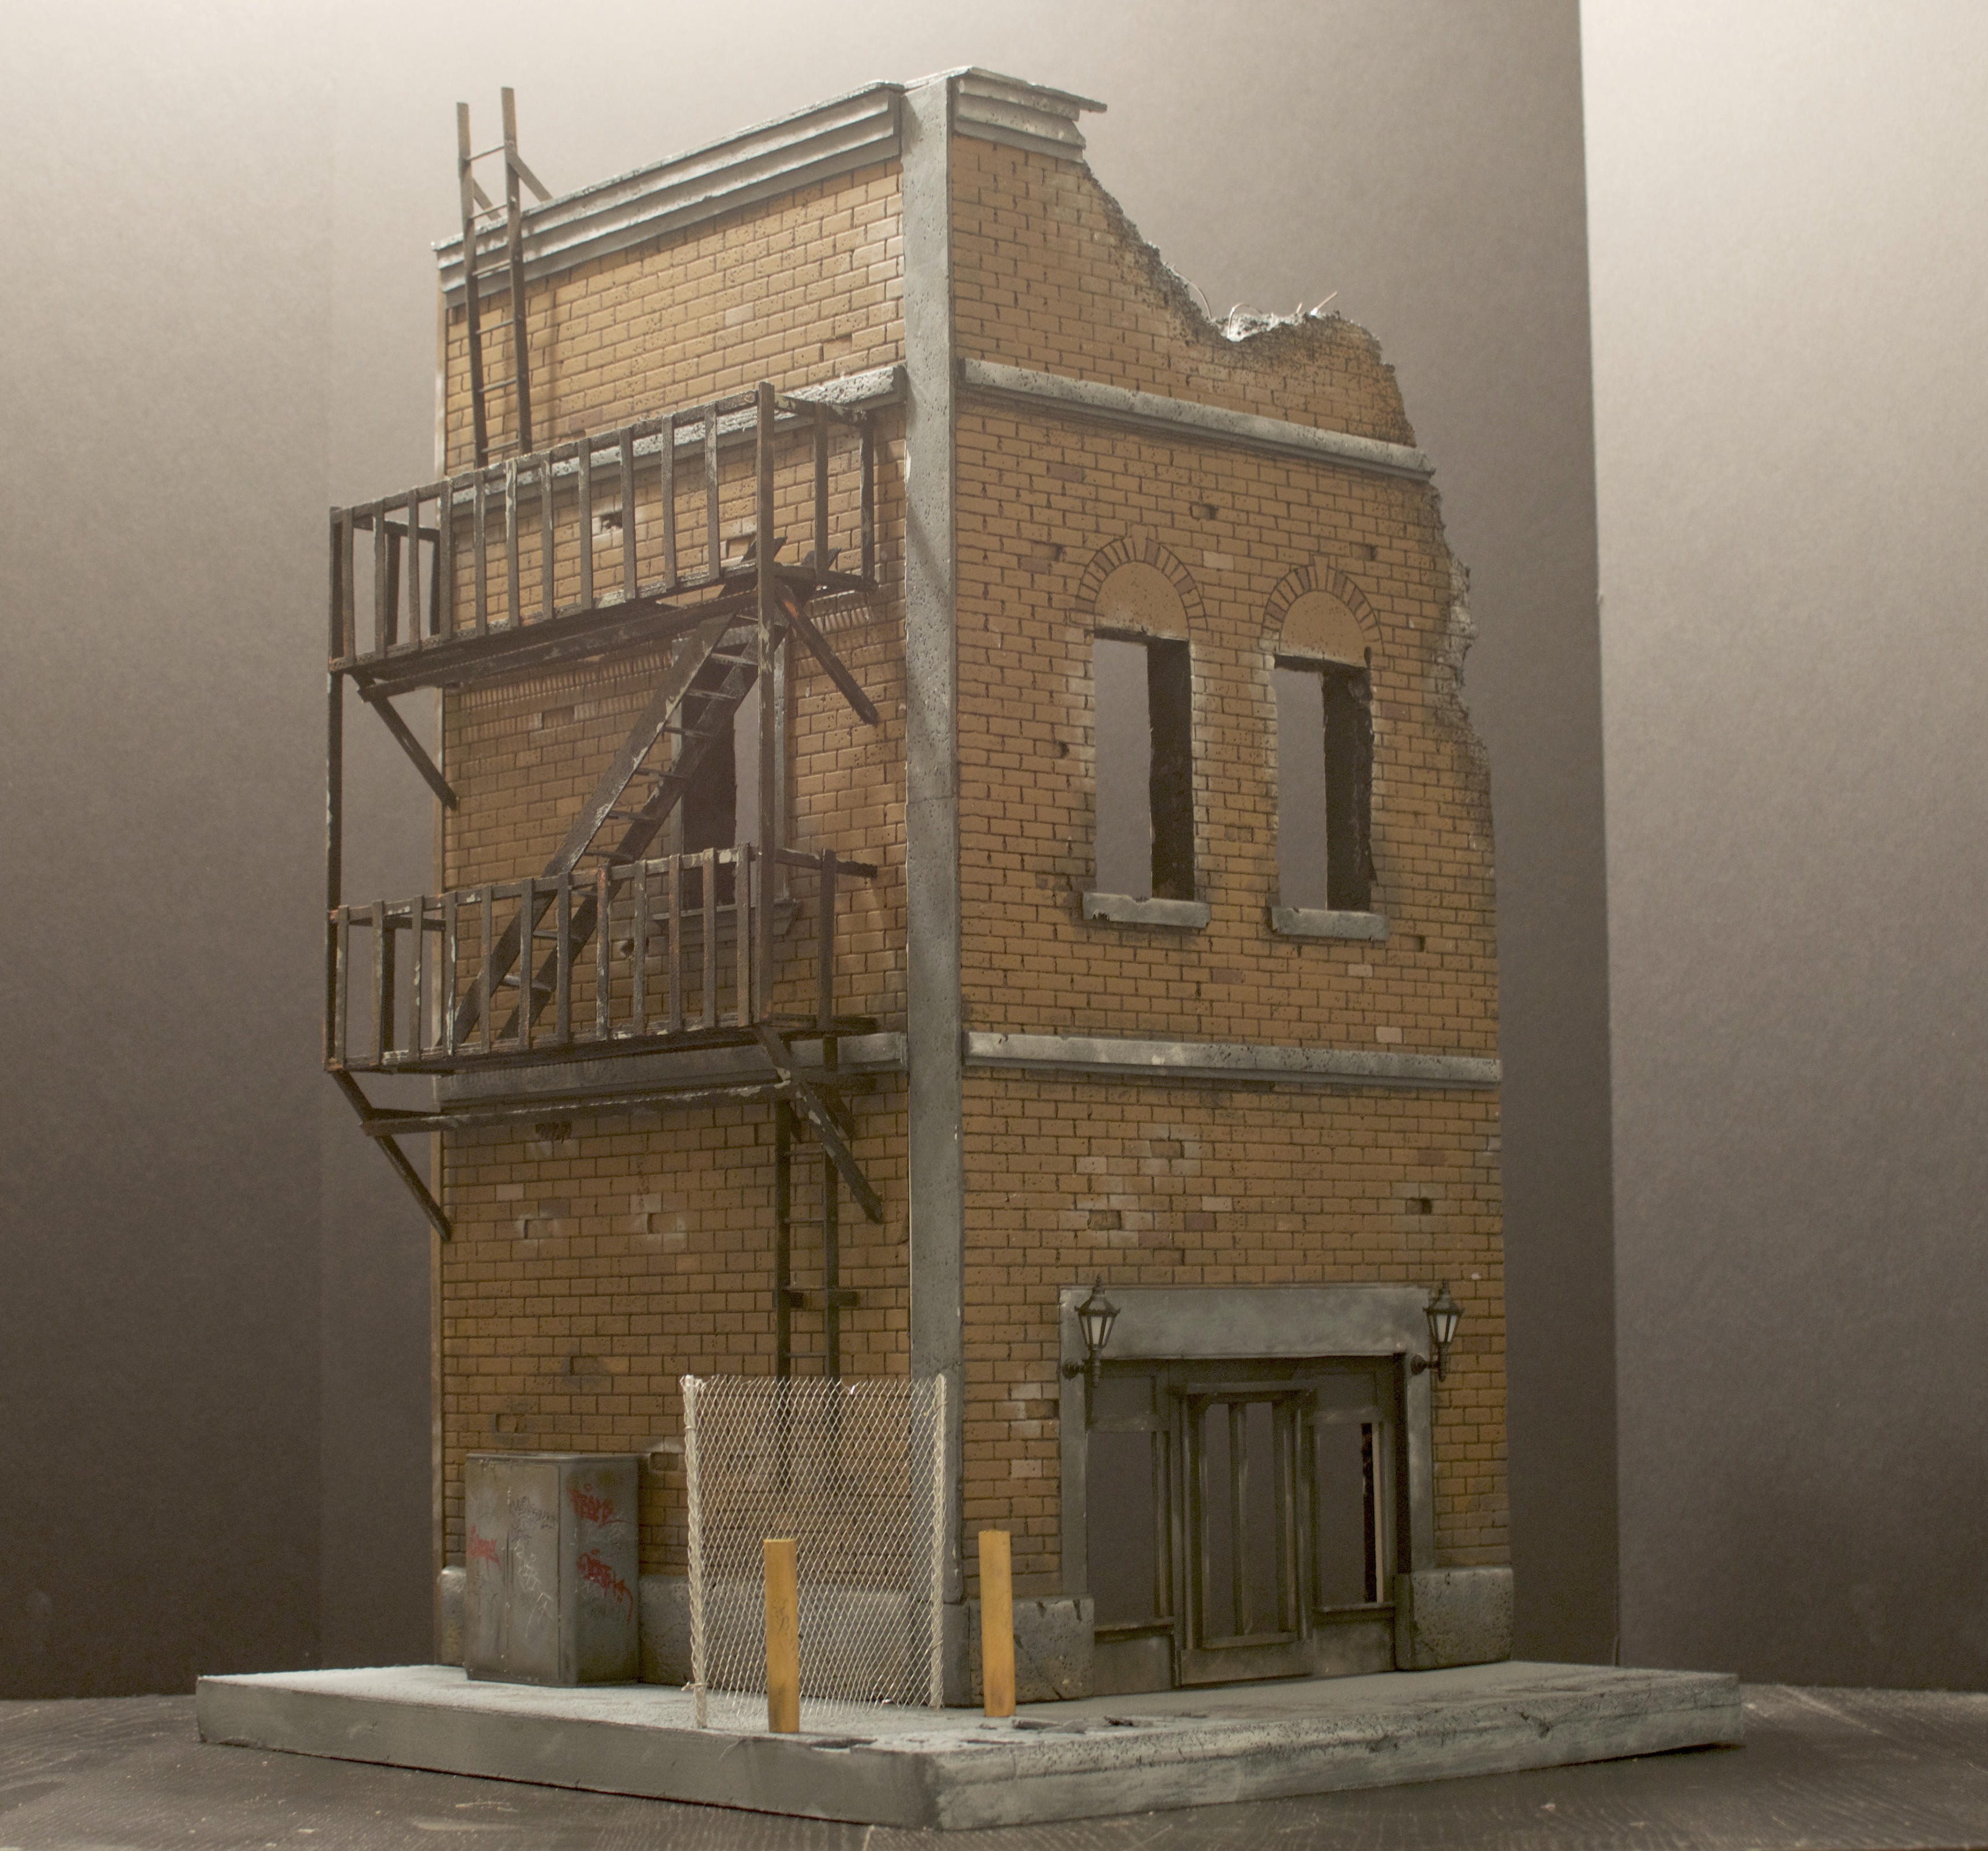 Urban building diorama | Cobraoner464's Blog